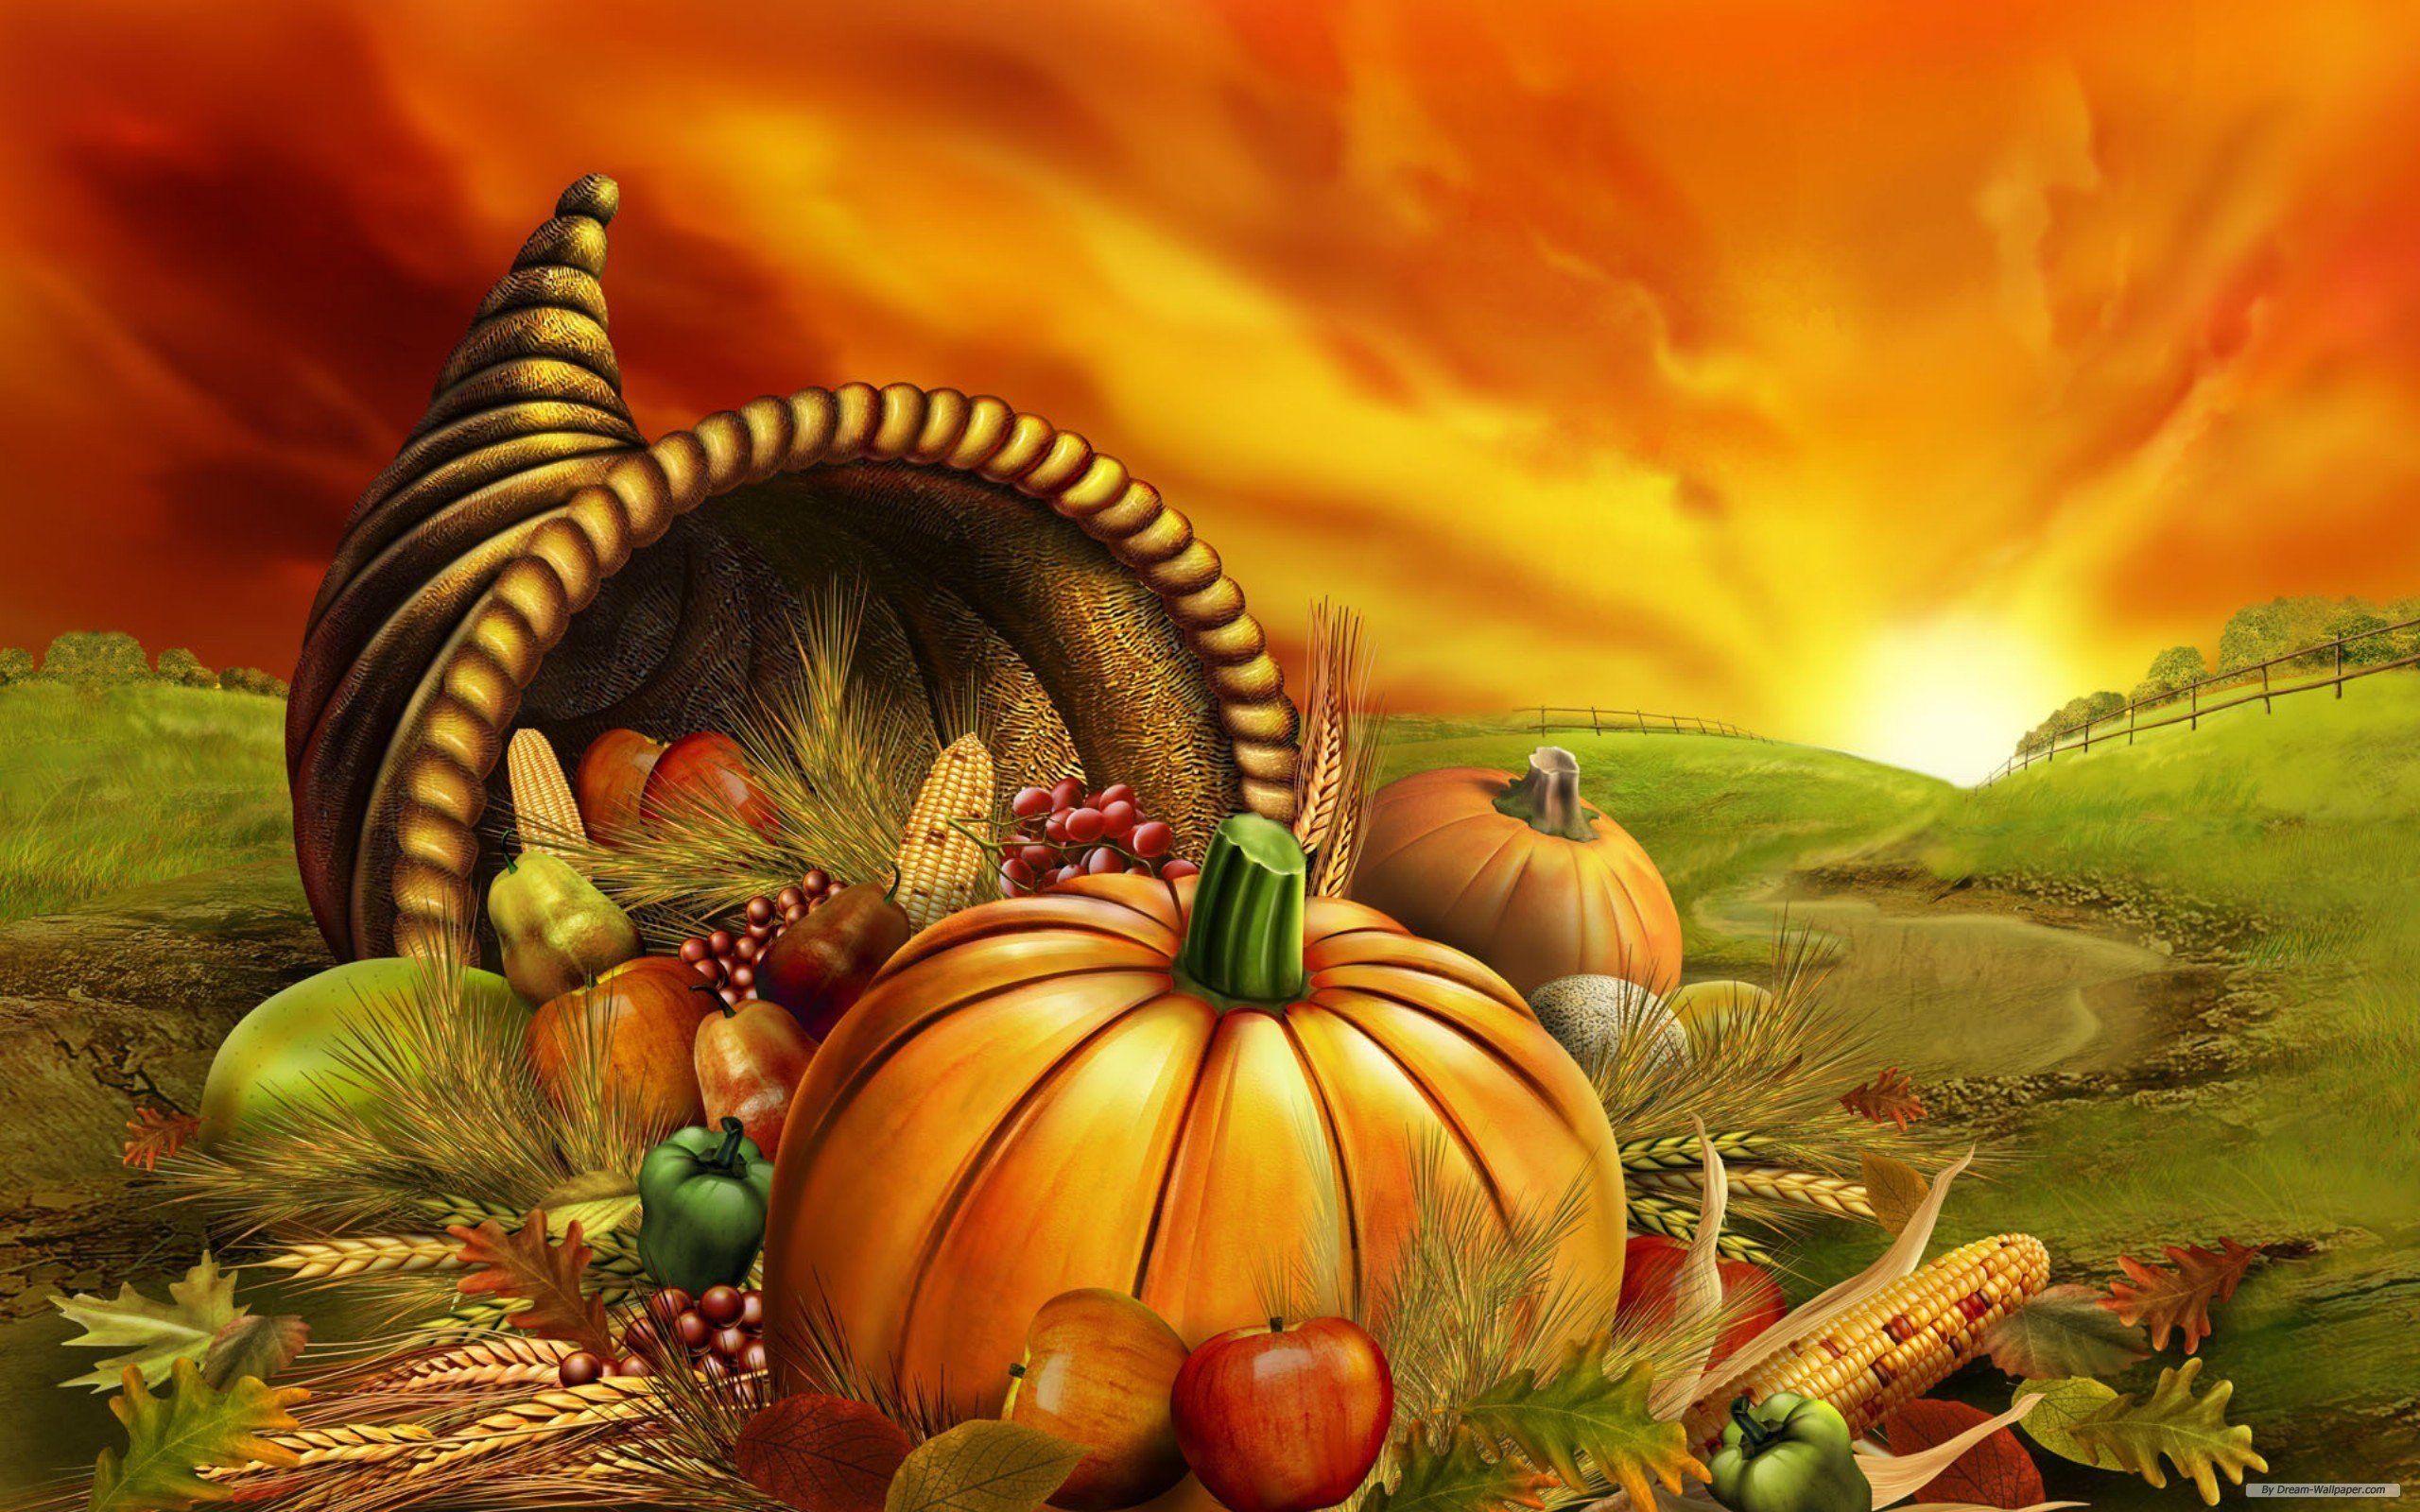 Thanksgiving Cornucopia HD Wallpaper Image Picture